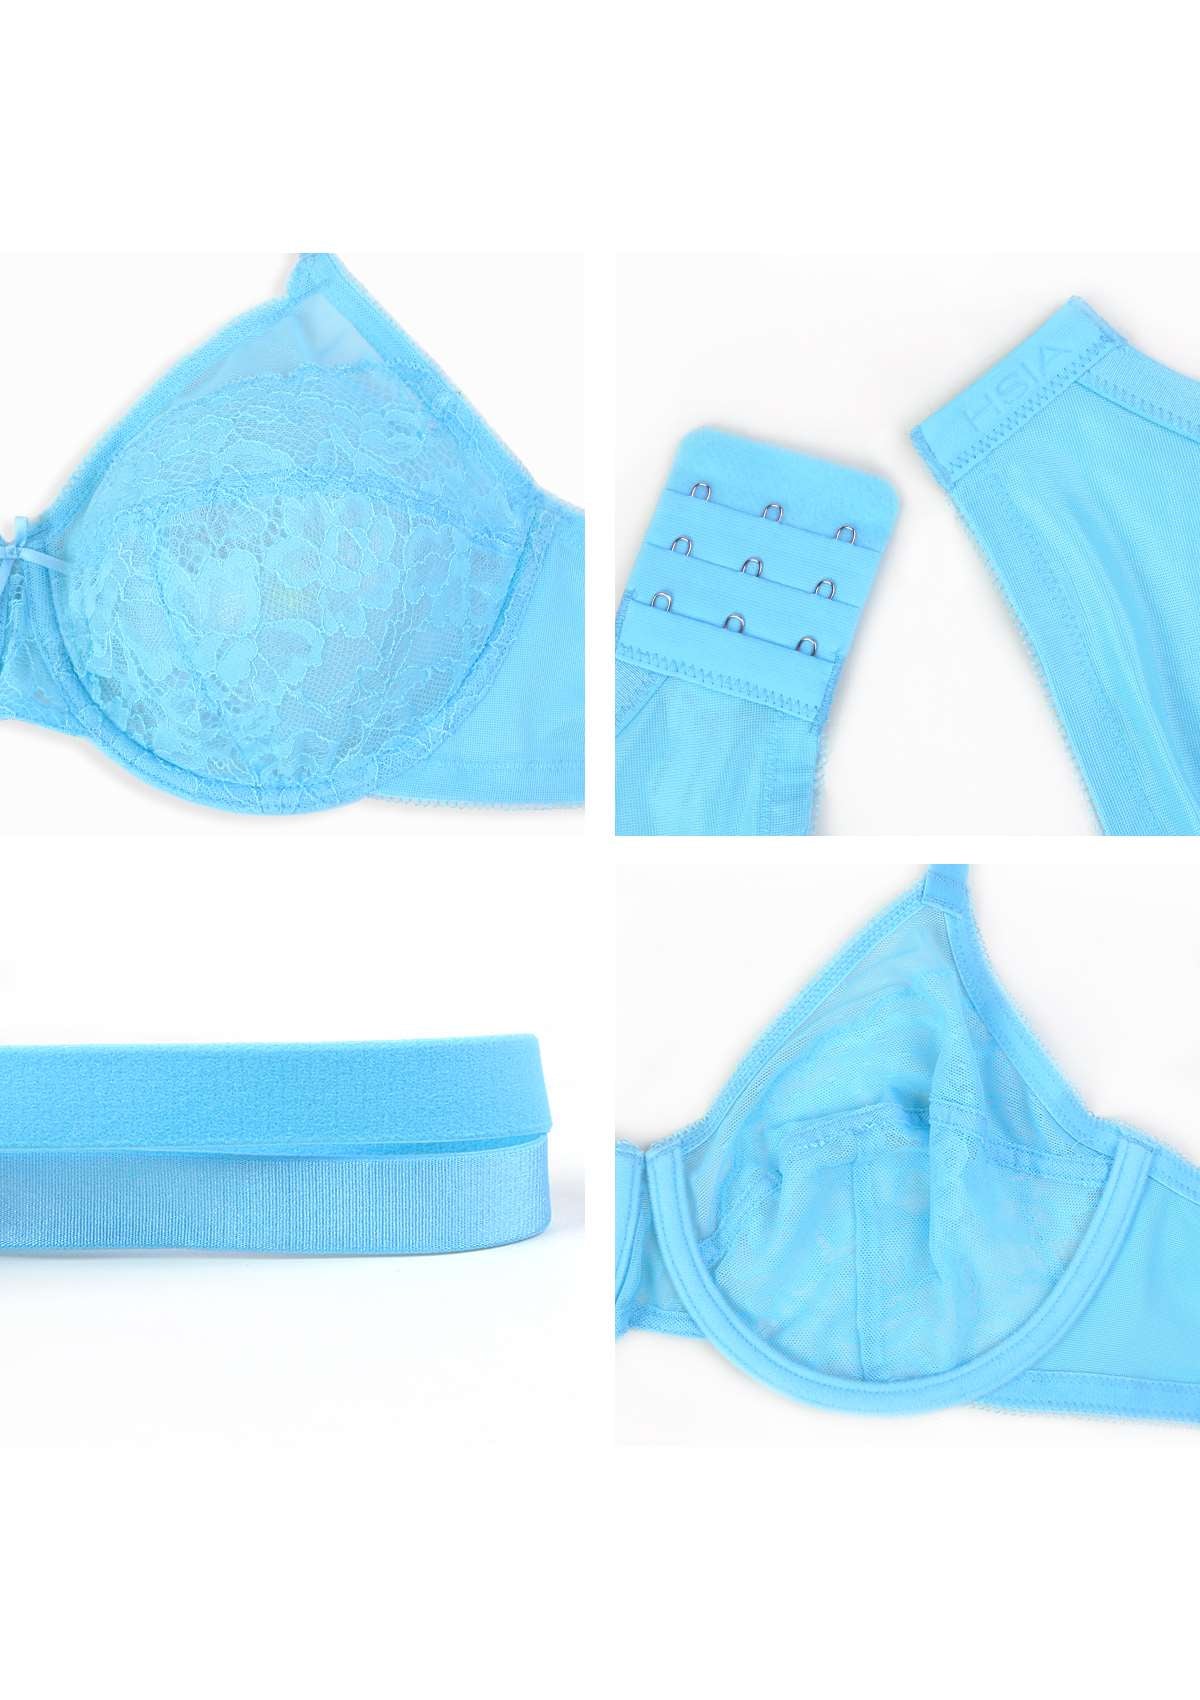 HSIA Enchante Minimizer Lace Bra: Full Support For Heavy Breasts - Capri Blue / 36 / C